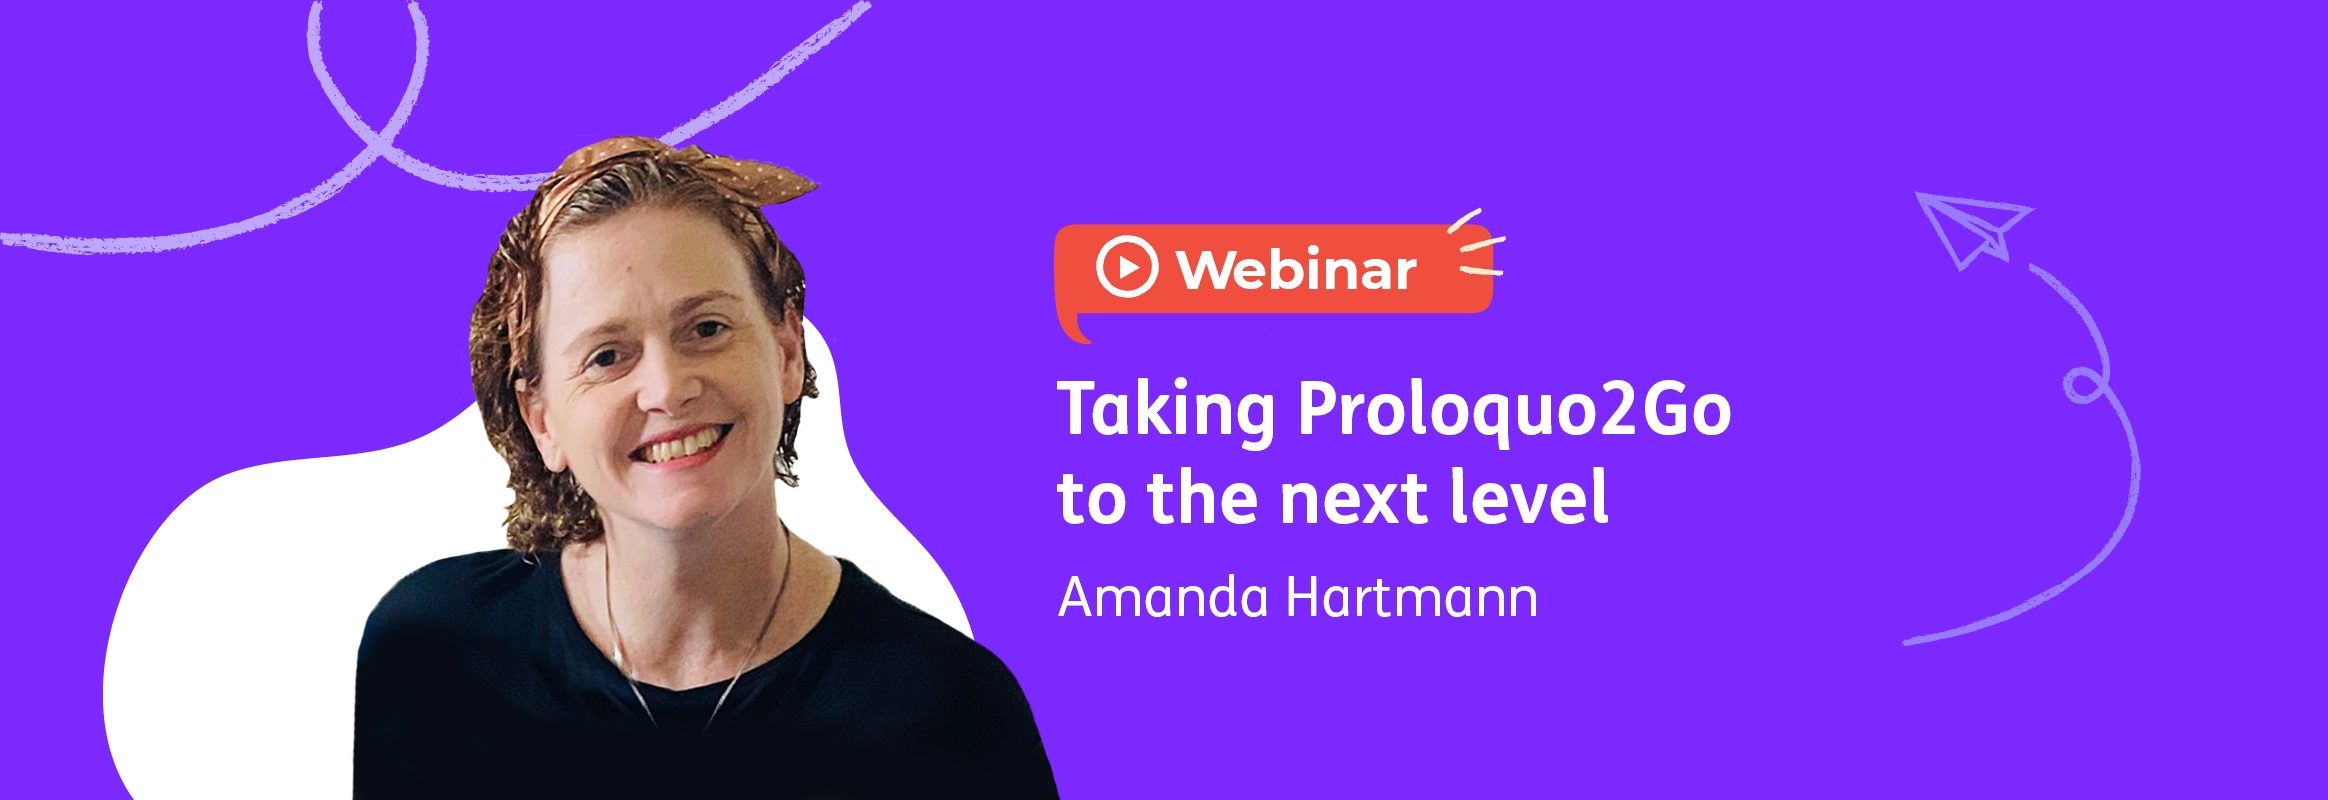 Amanda Hartmann: Taking Proloquo2Go to the next level